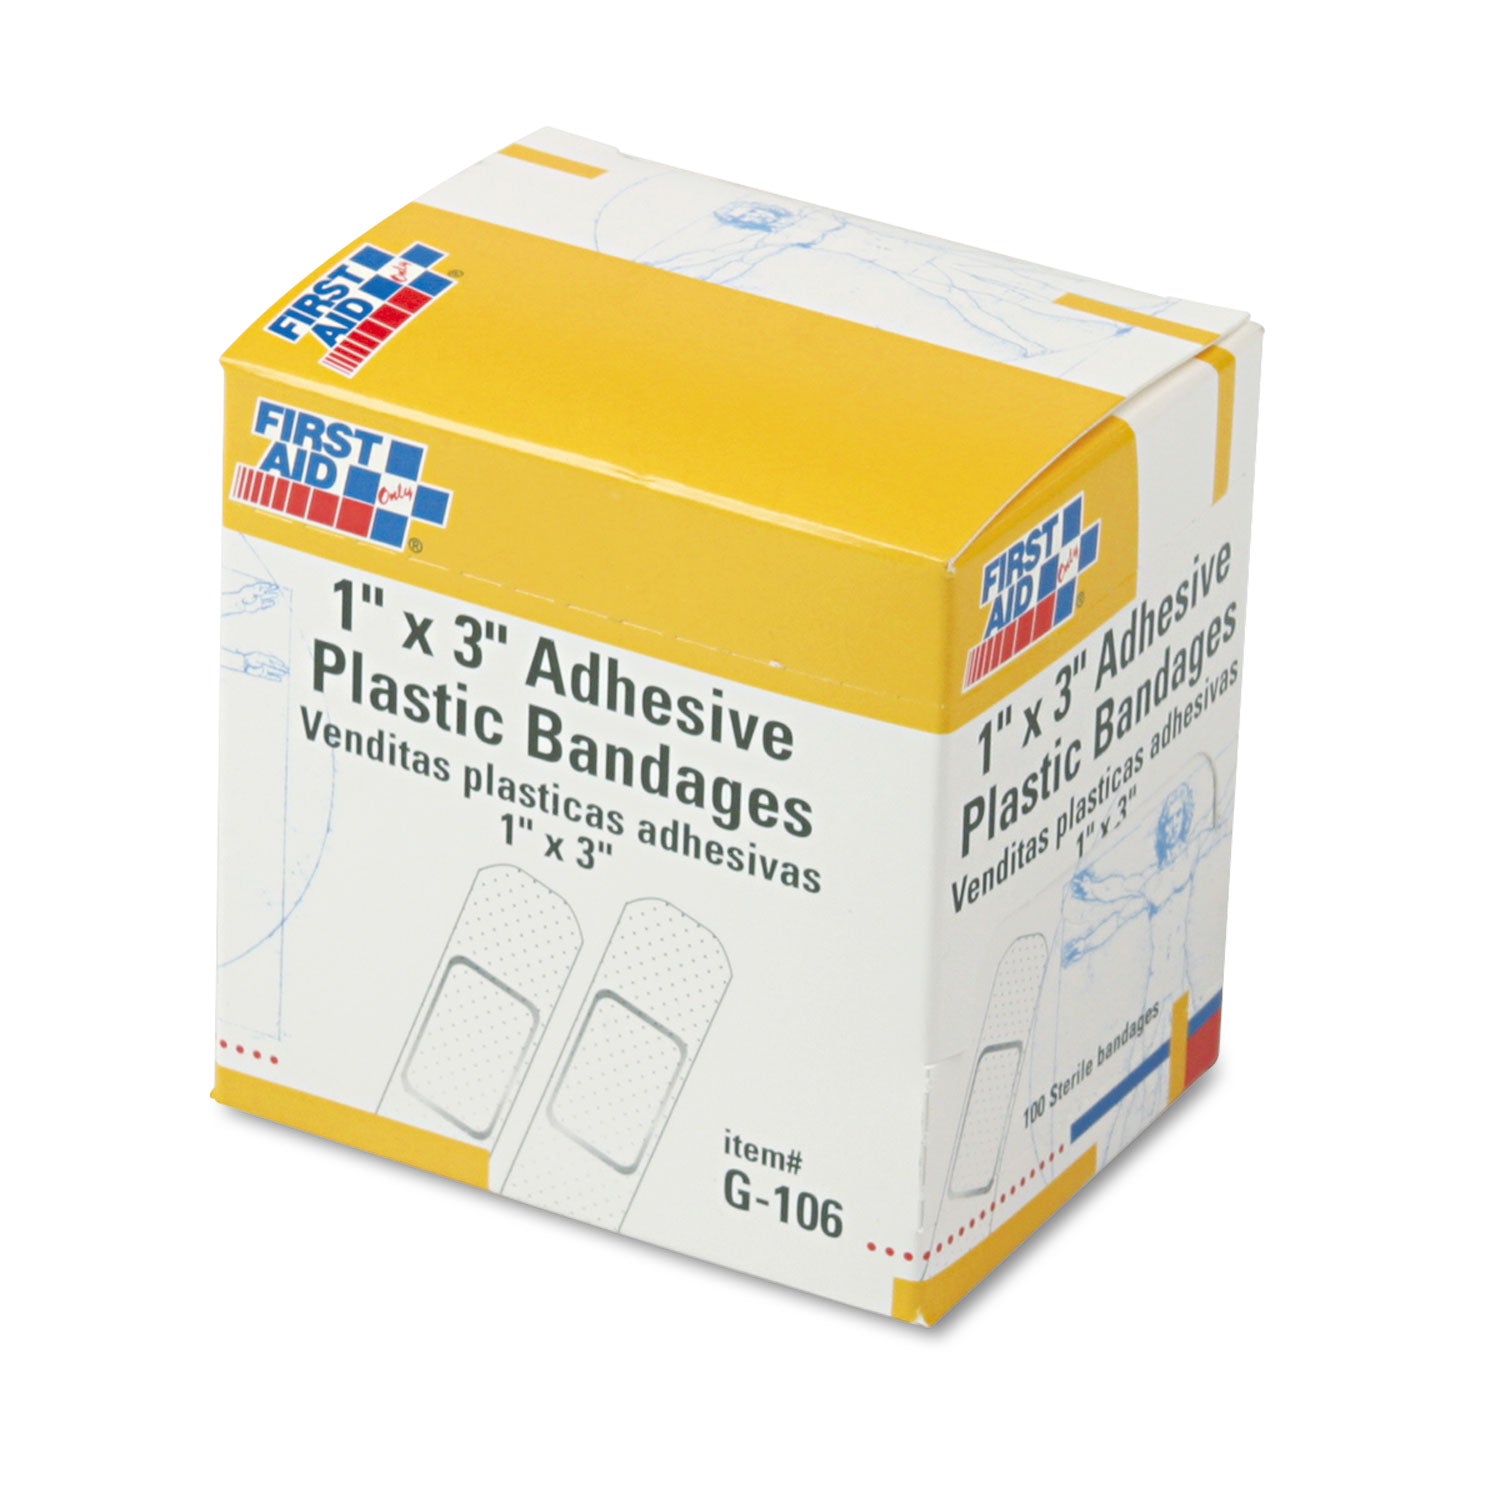 Plastic Adhesive Bandages, 1 x 3, 100/Box - 